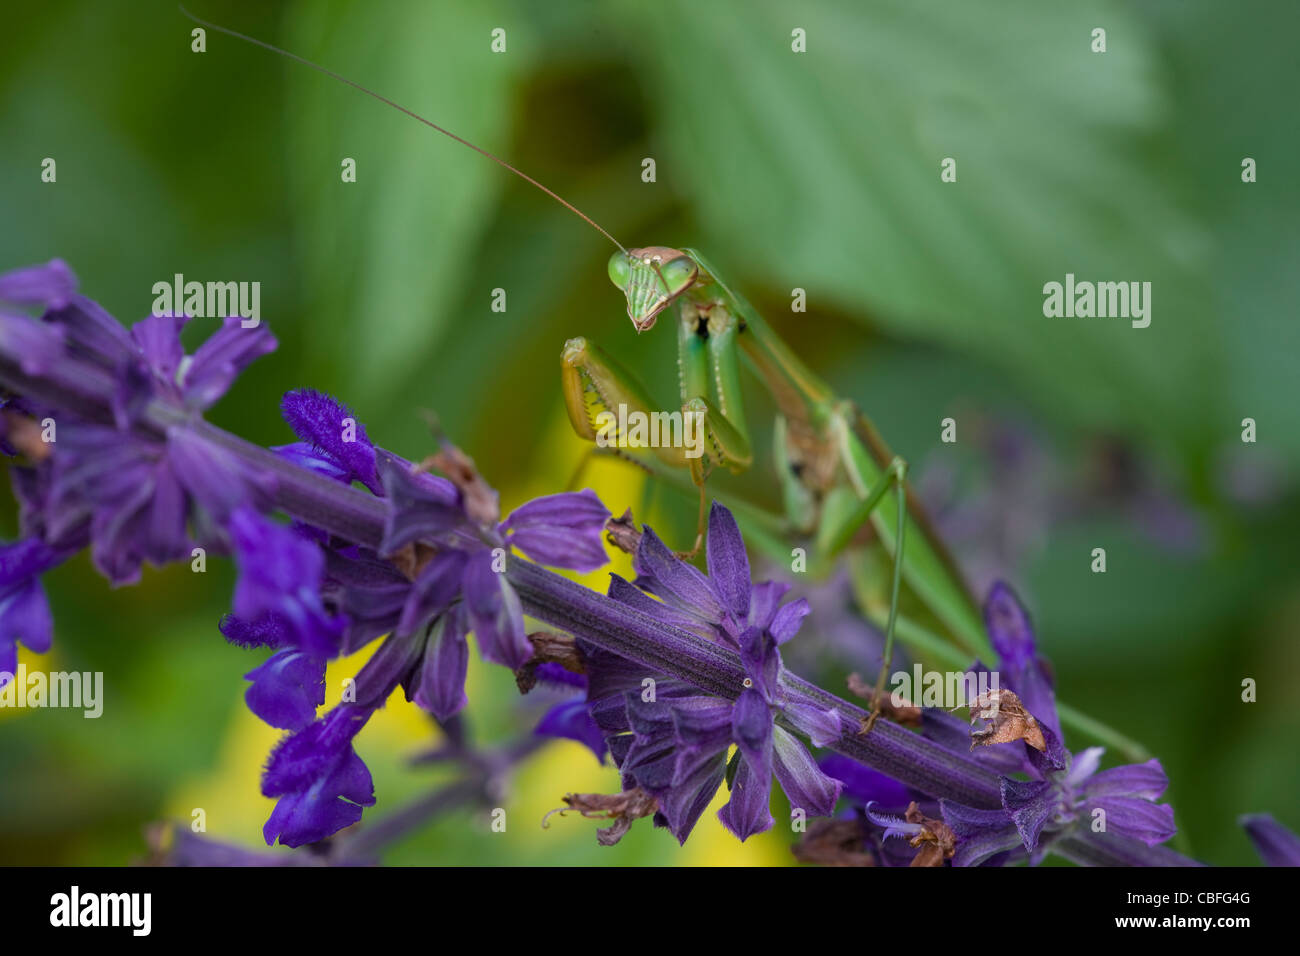 Praying Mantis, Chinese Mantis (Tenodera aridifolia sinensis) on purple flowers Stock Photo